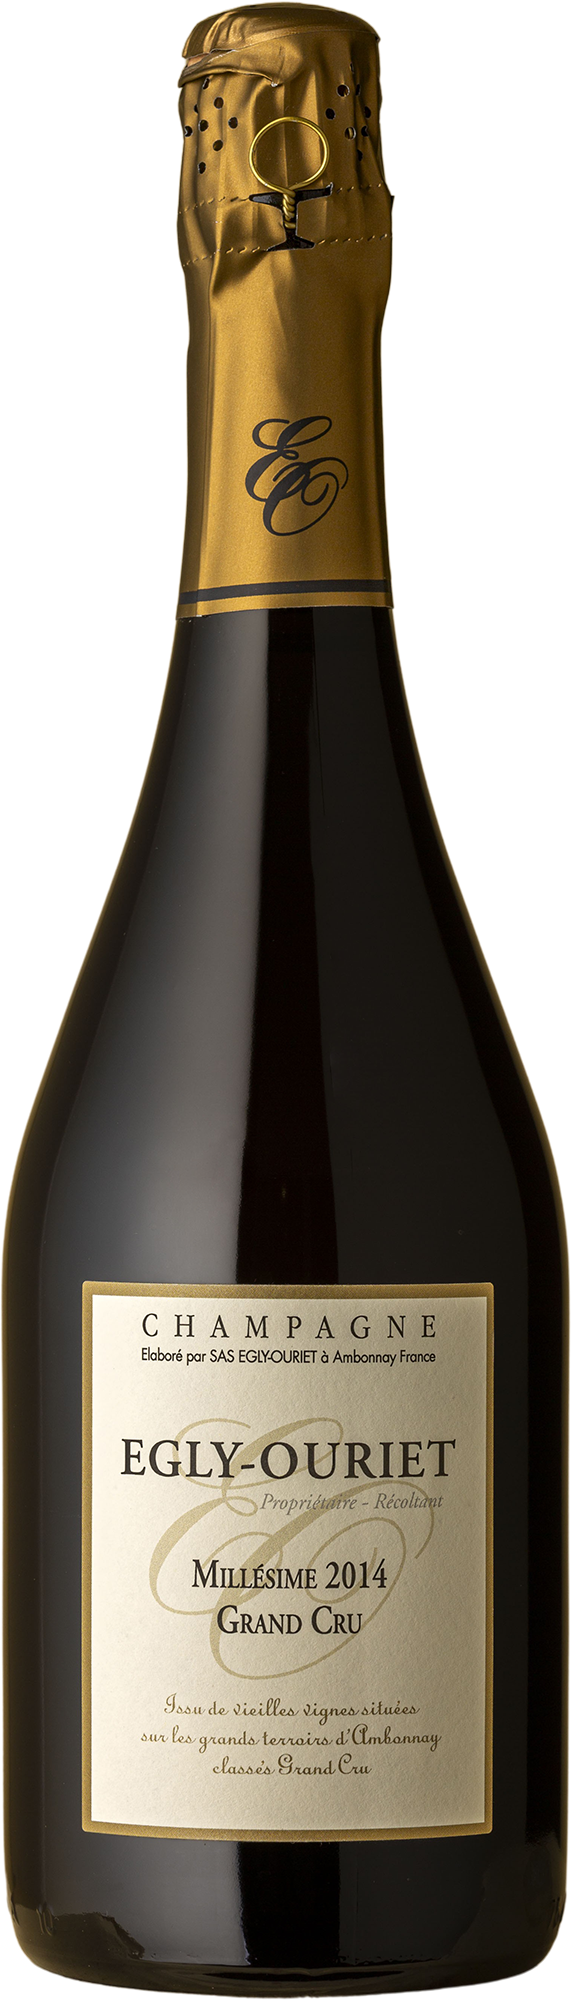 Egly-Ouriet - Grand Cru Millésime 2014 Sparkling Wine